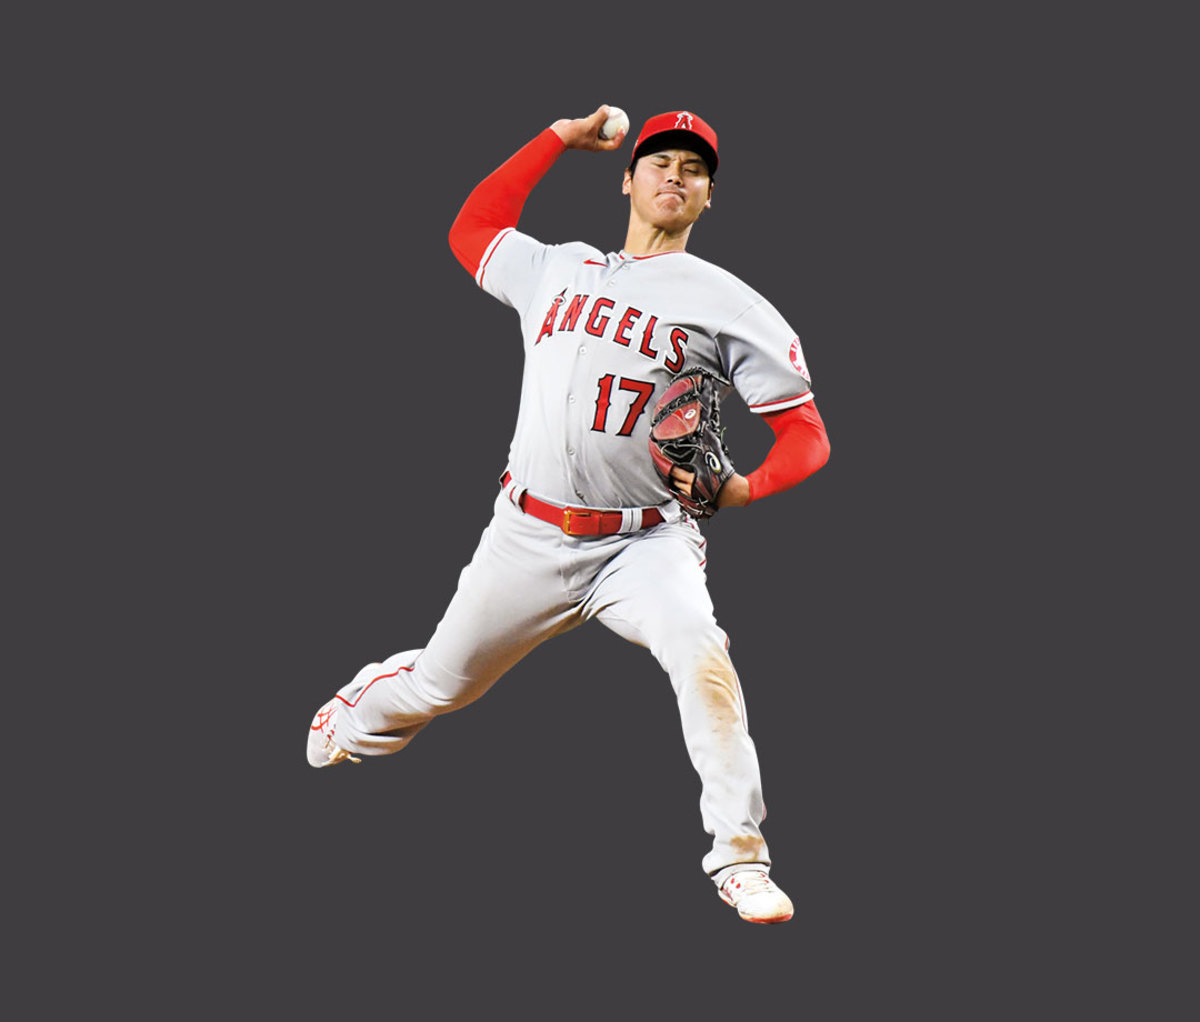 Baseball player throwing pitch